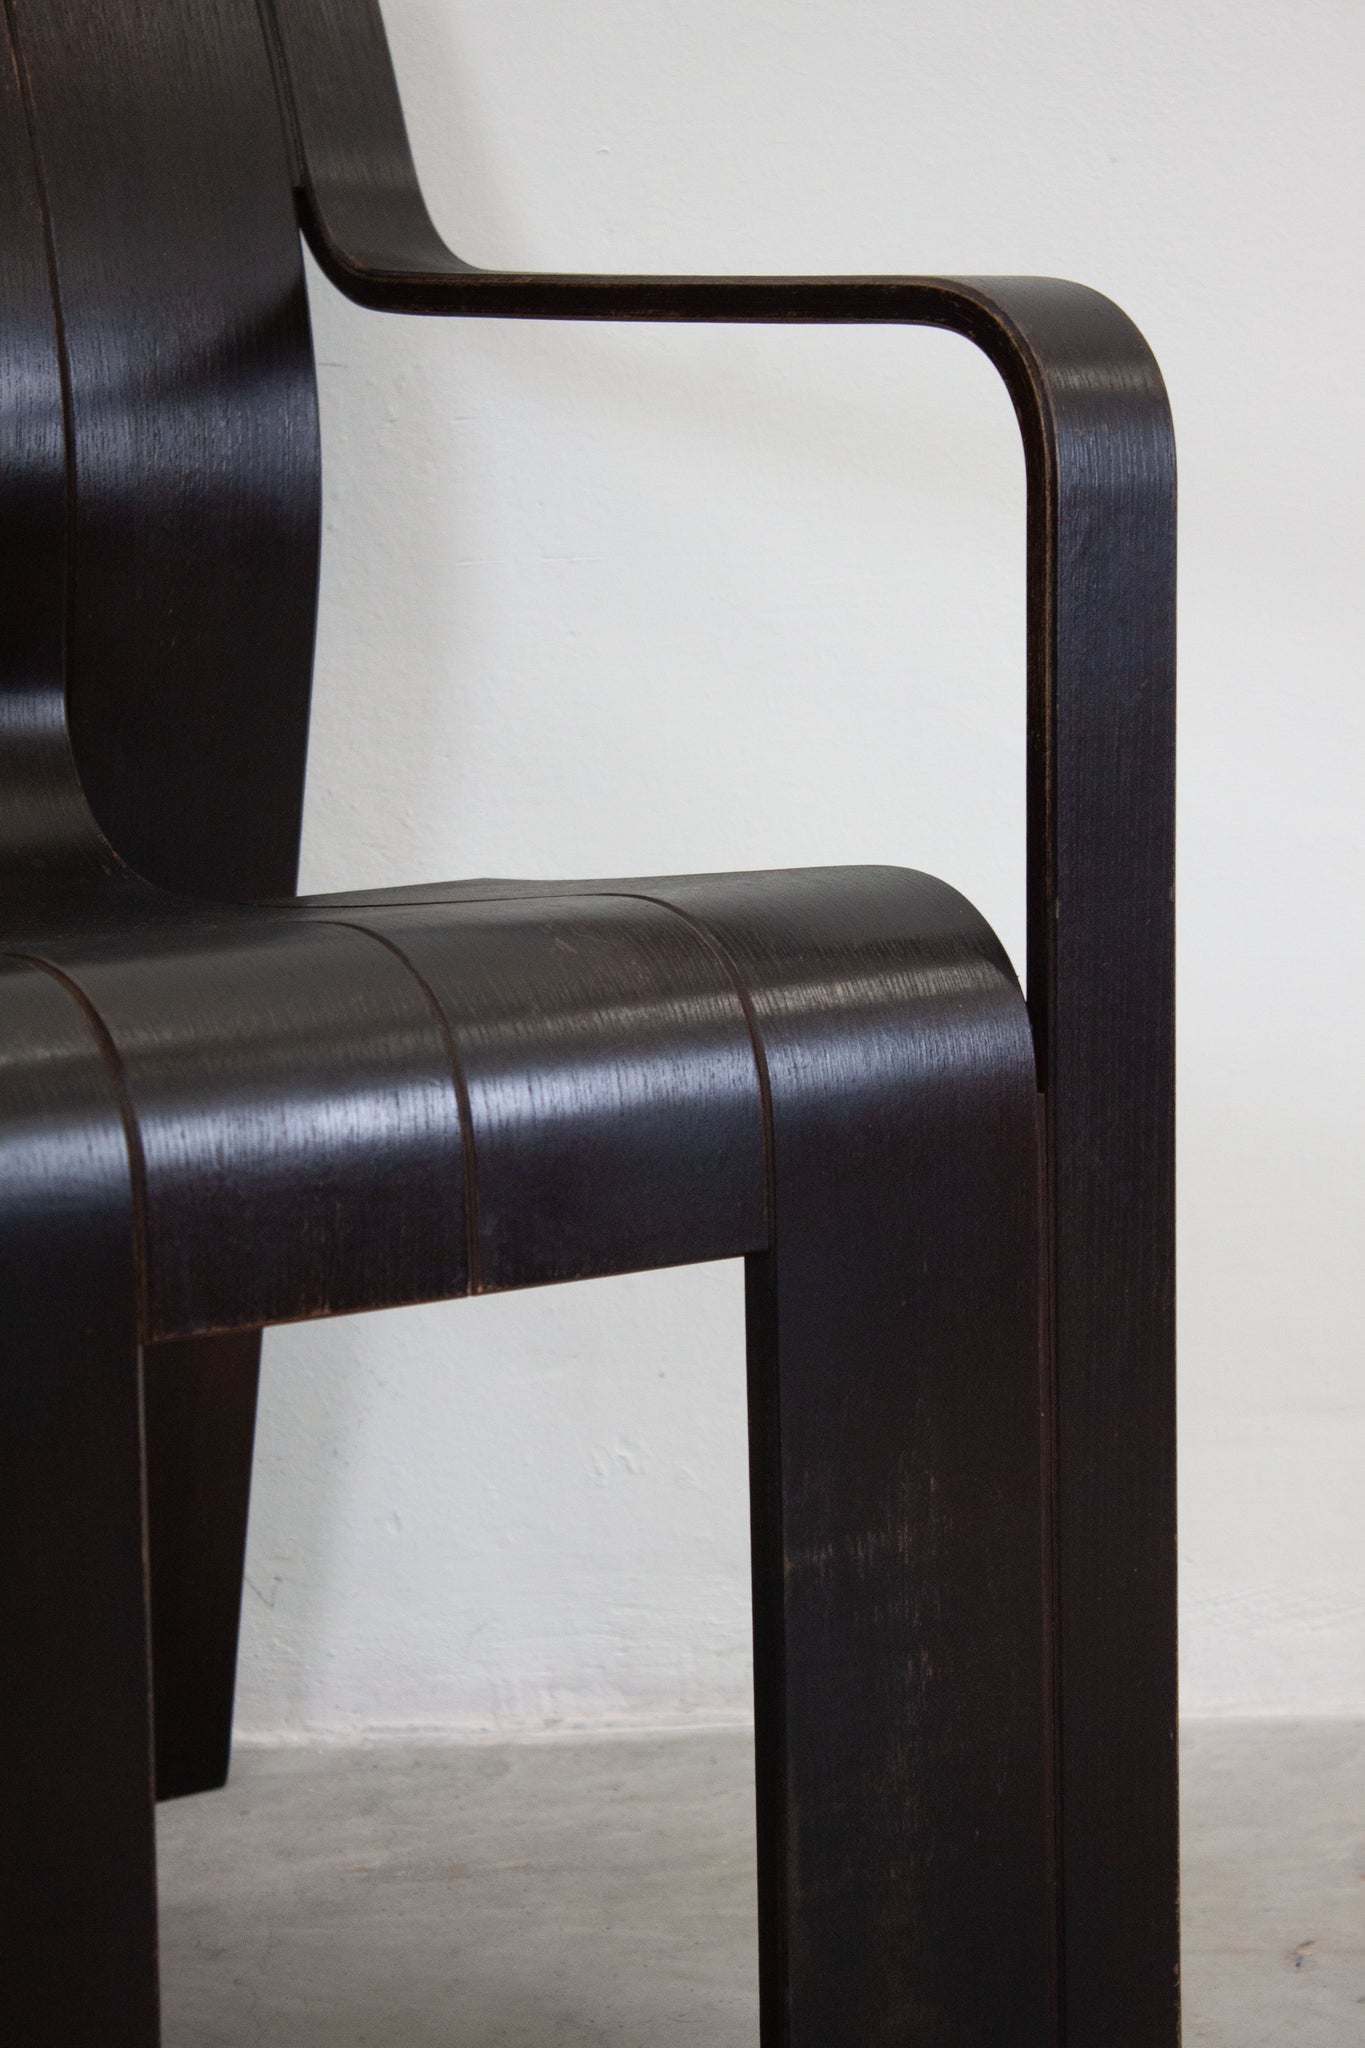 Castelijn Strip Chairs with Armrest by Gijs Bakker (Black)